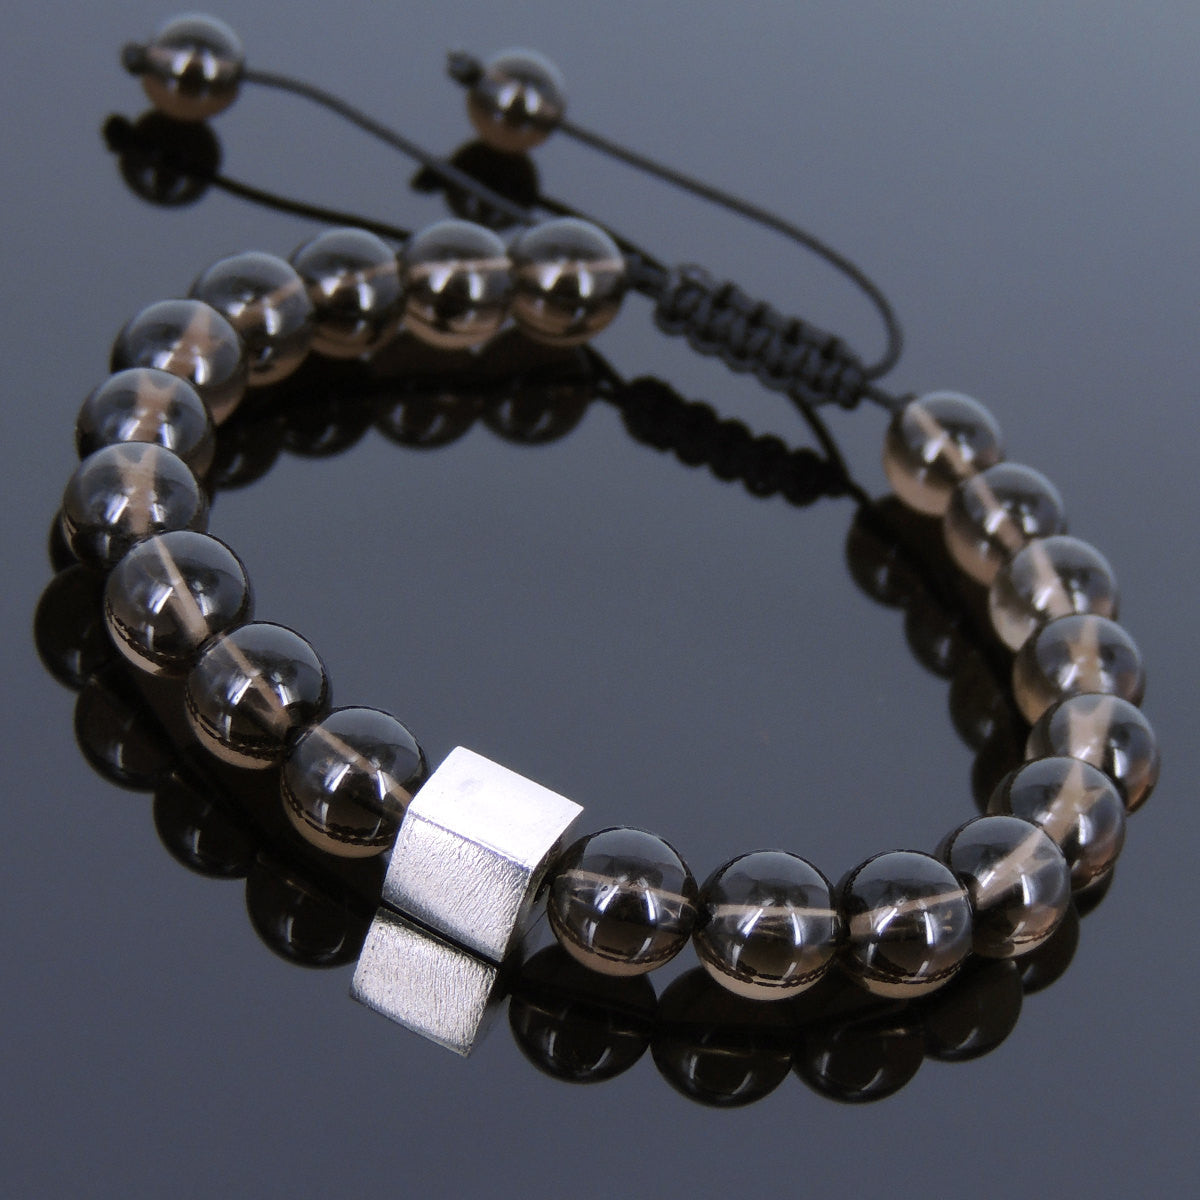 Smoky Quartz Adjustable Braided Gemstone Bracelet with S925 Sterling Silver Cube Bead - Handmade by Gem & Silver BR805